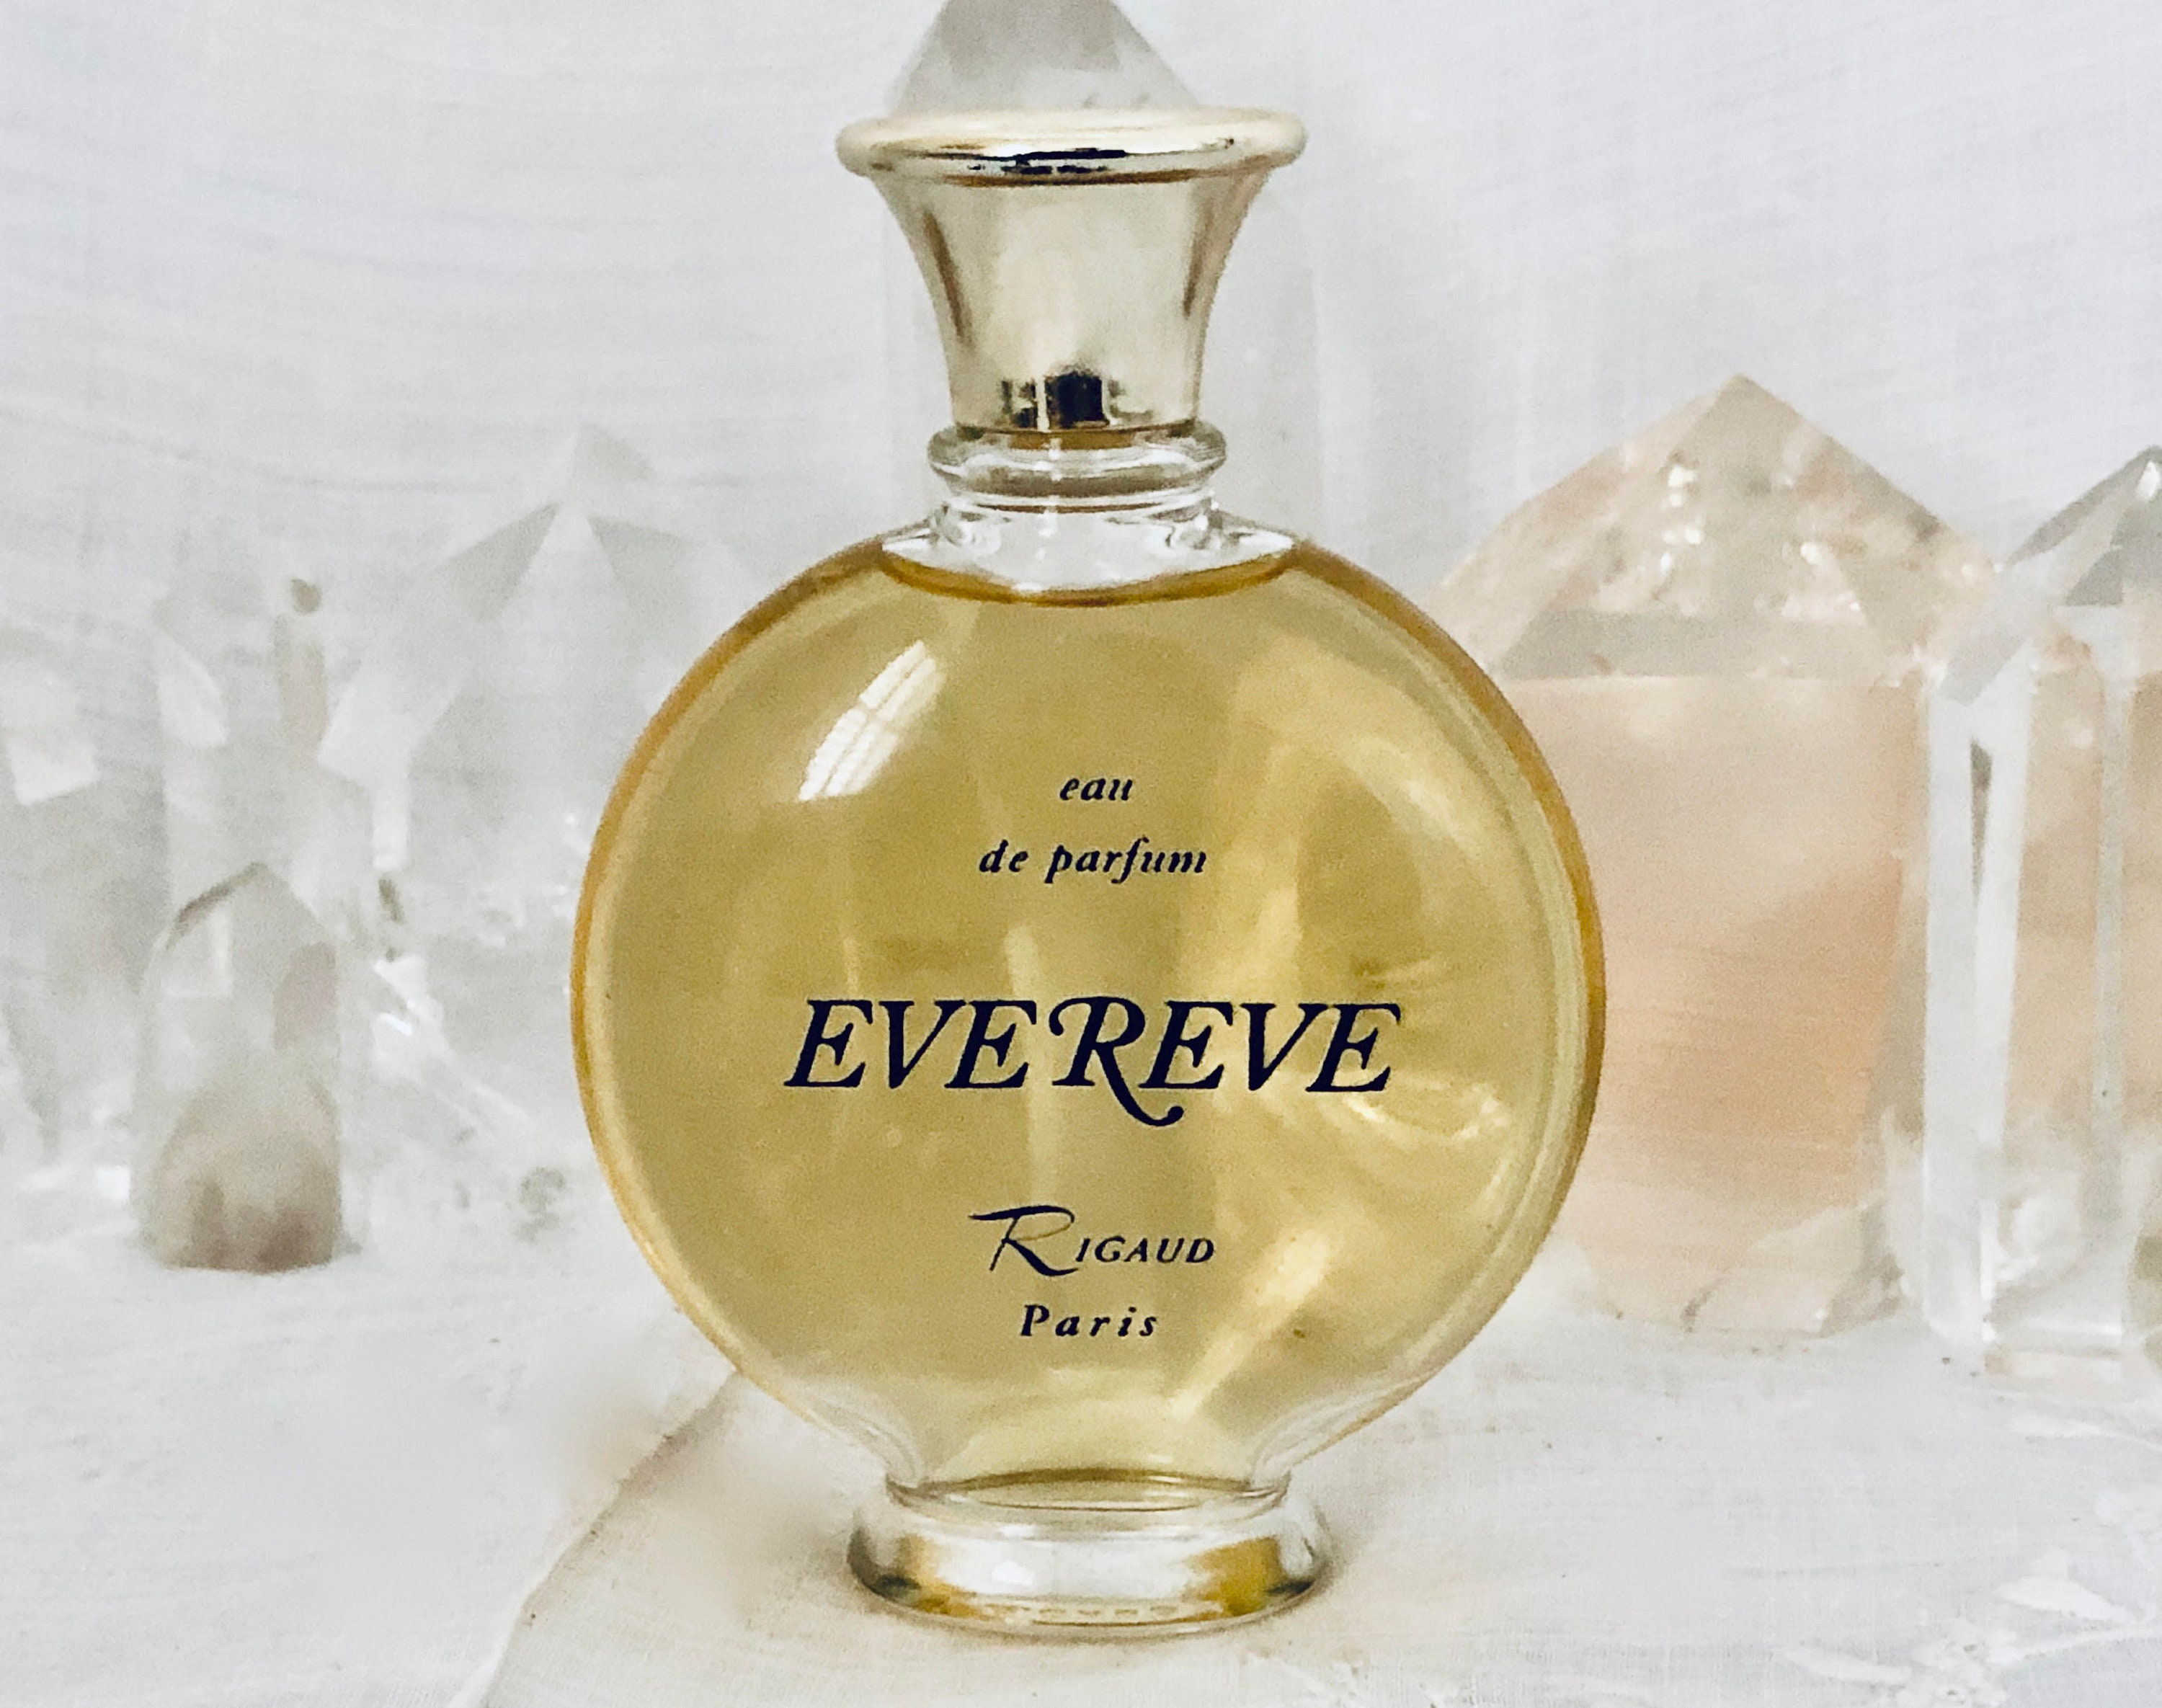 Reve Indien Fragrances for Women